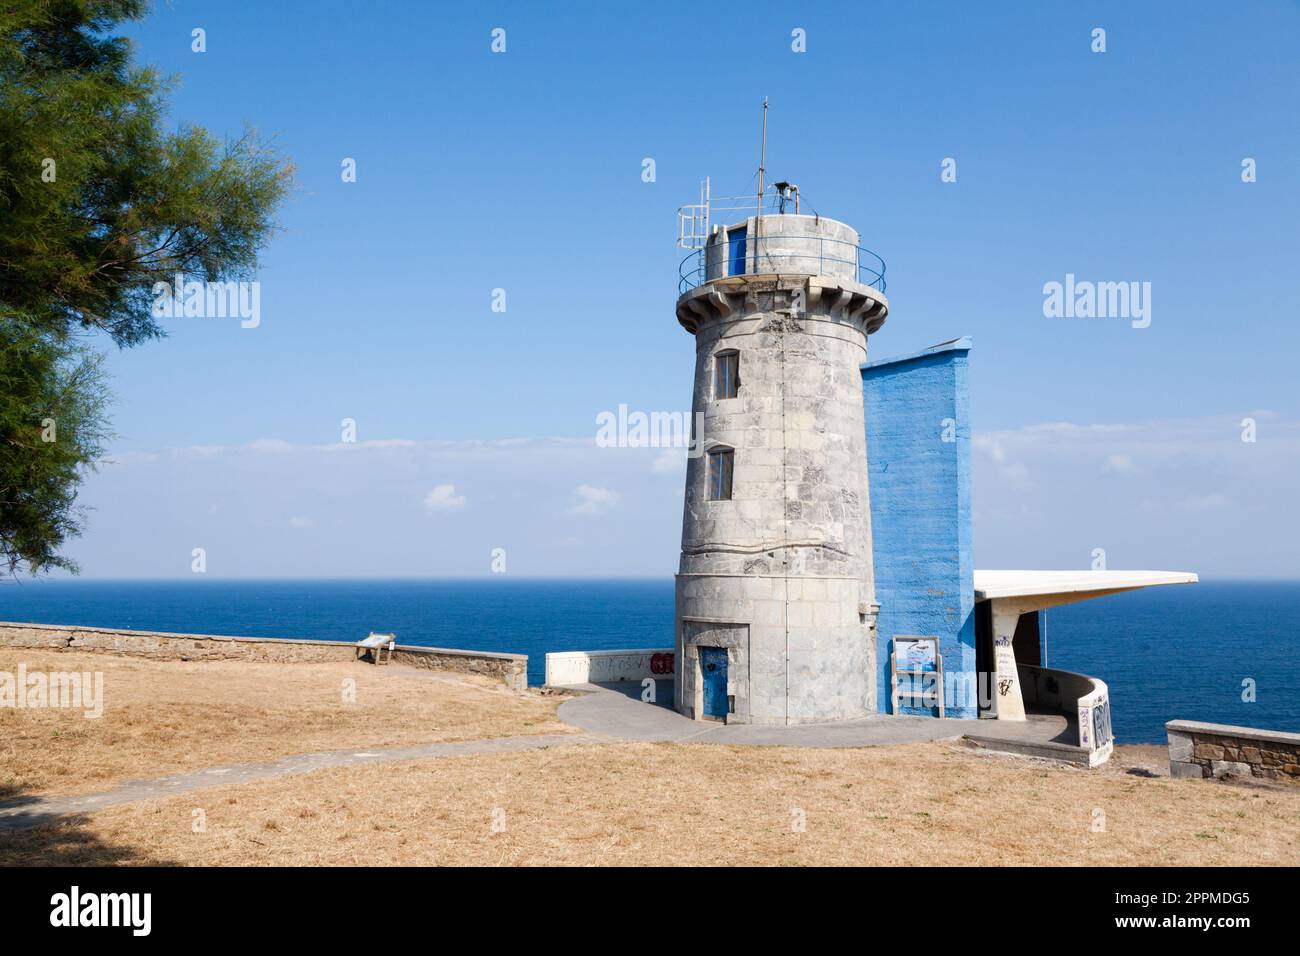 Cape Matxitxako lighthouse, gulf of Biscay, Spain Stock Photo